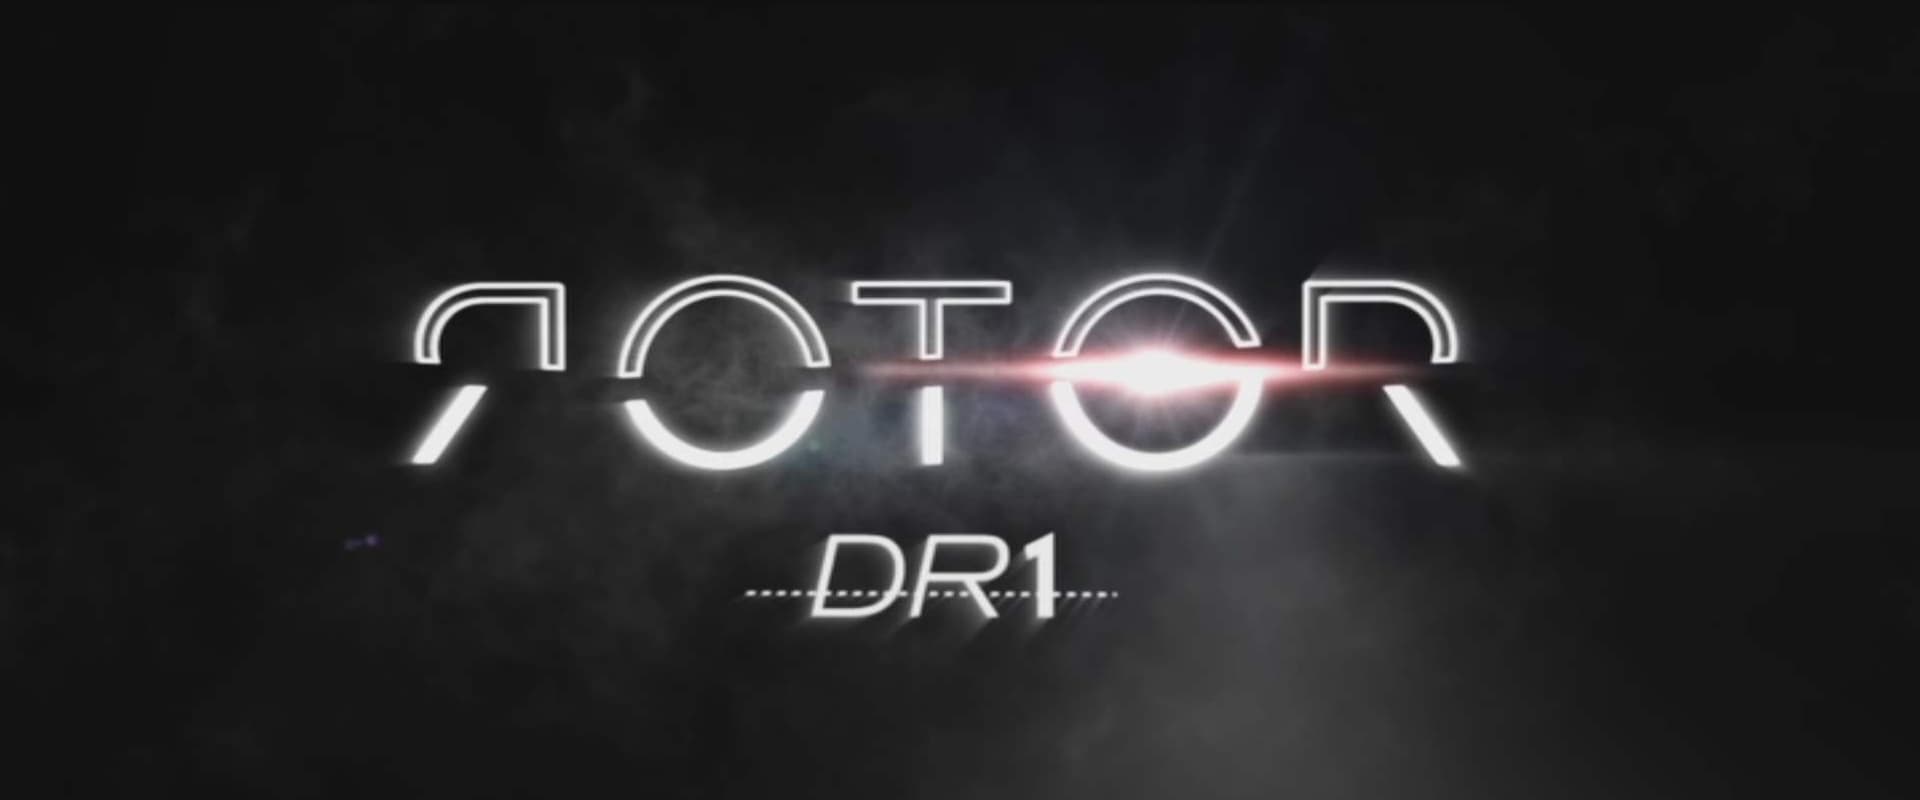 Rotor DR1